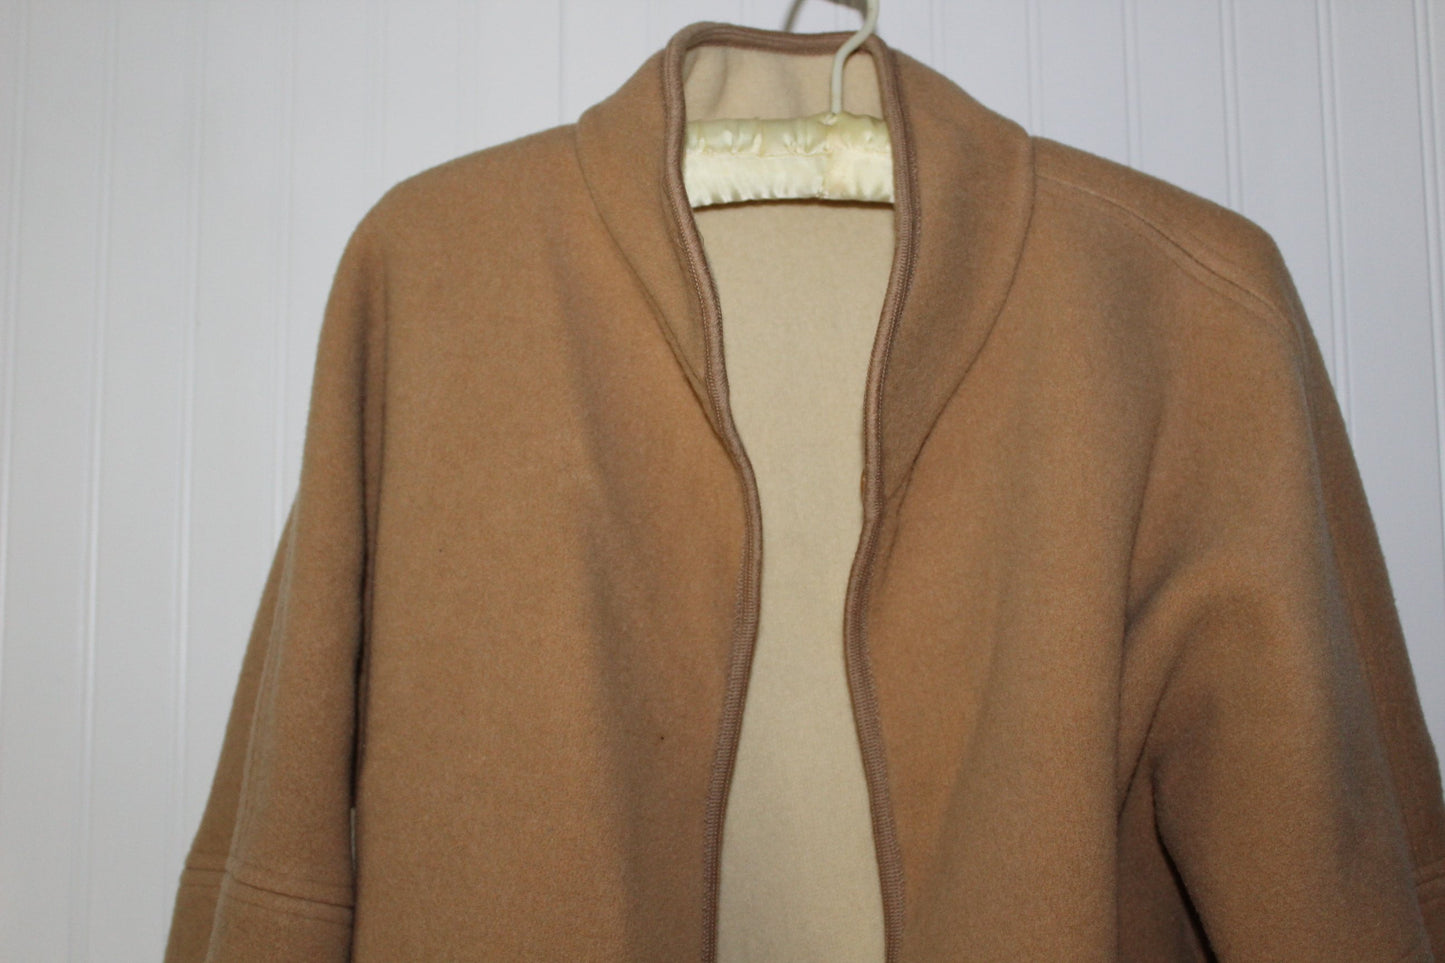 Cuddlecoat Turnaround Jacket Reversible Wool Cream Tan Medium Fits like Large like new